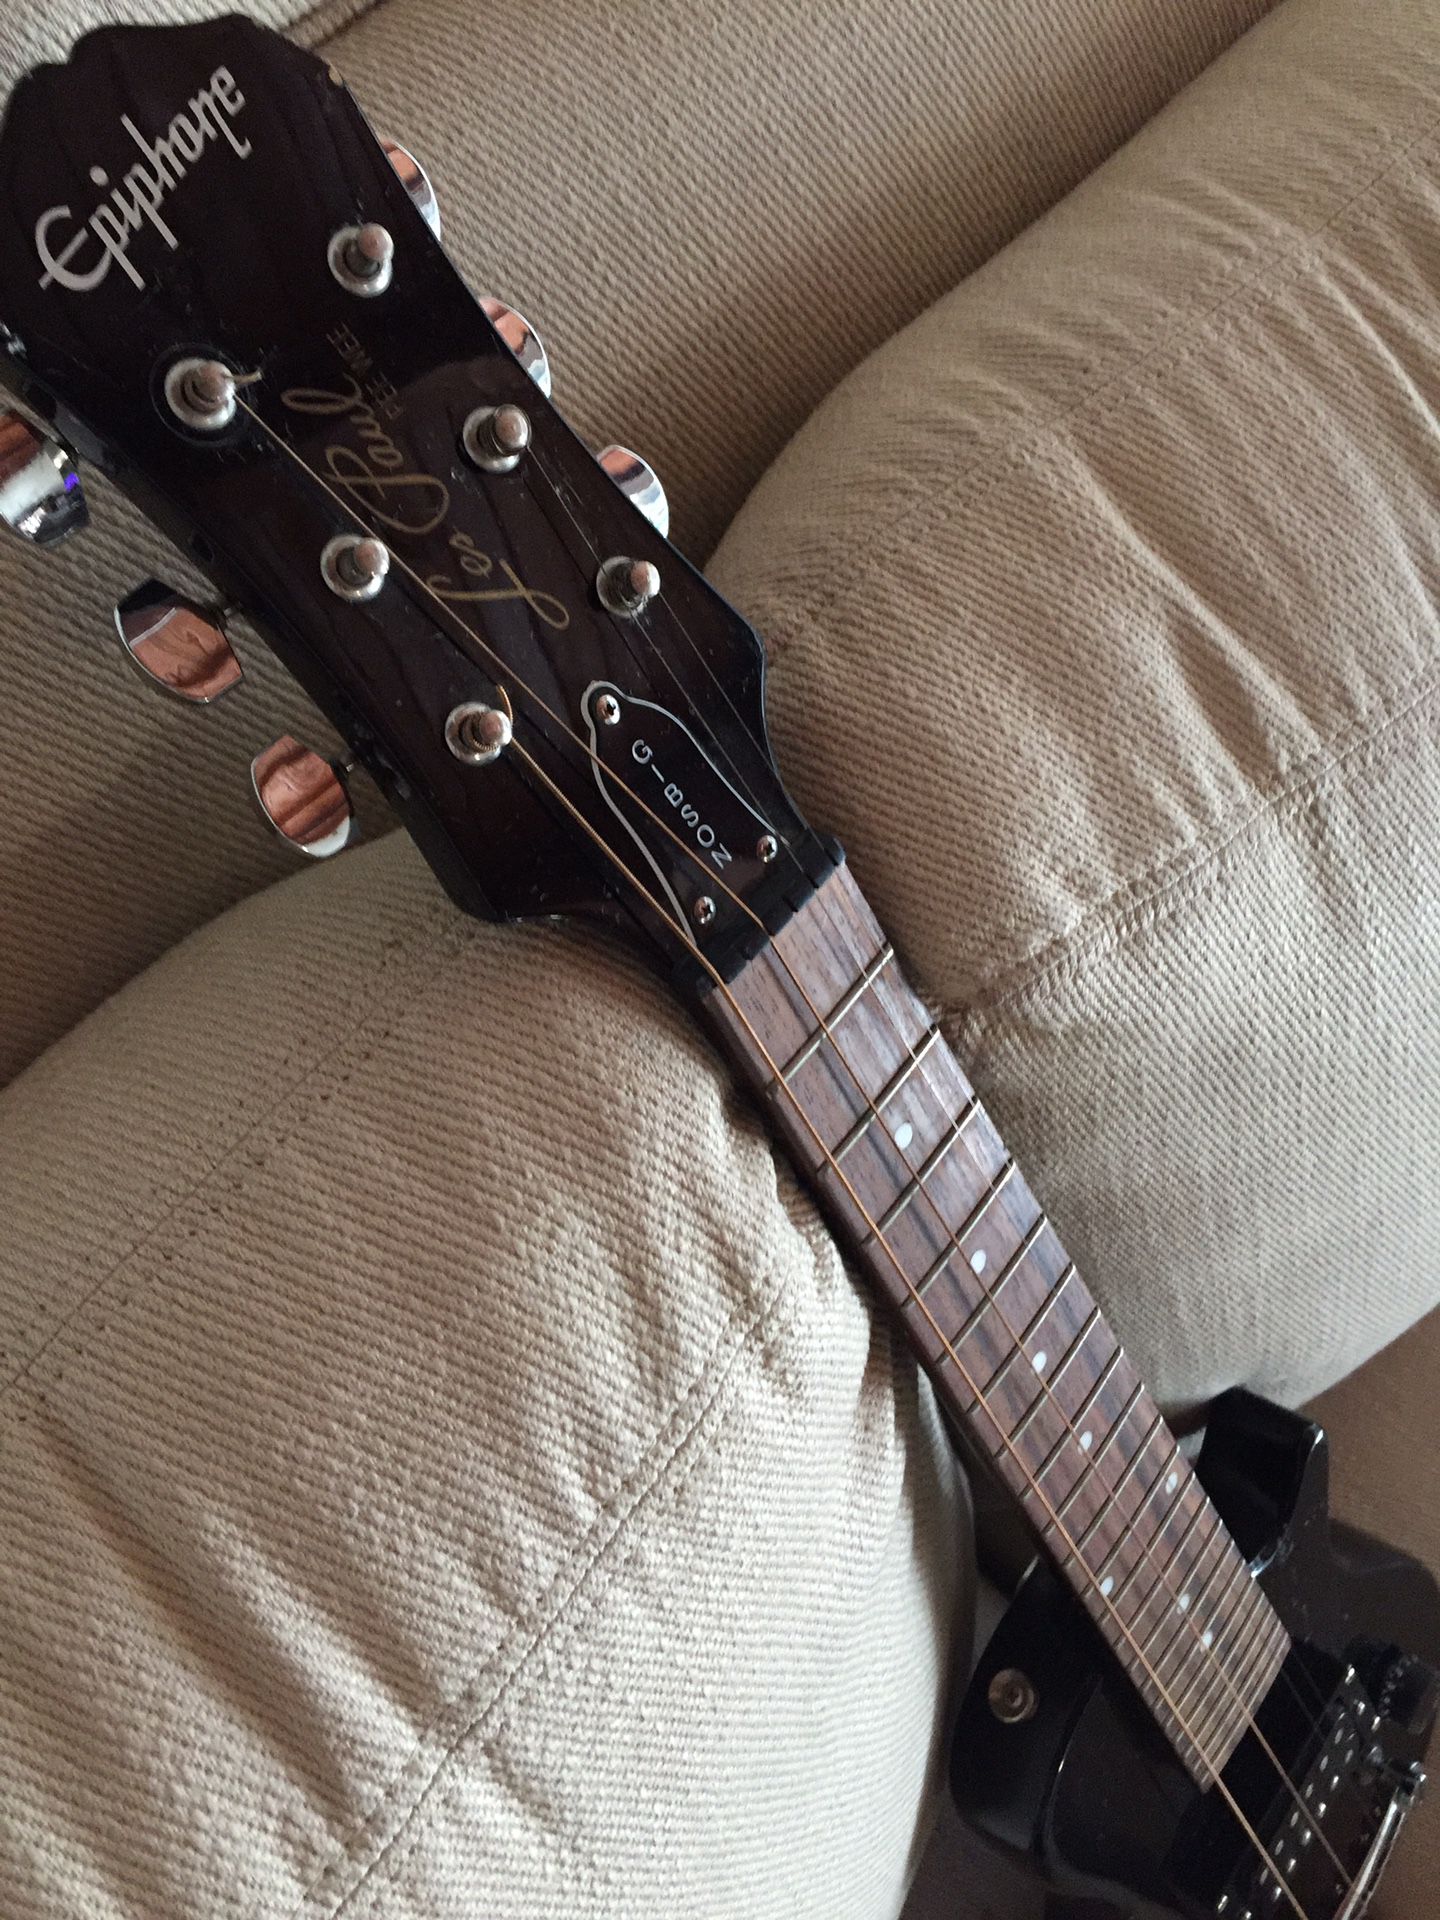 Epiphone Les Paul Guitar